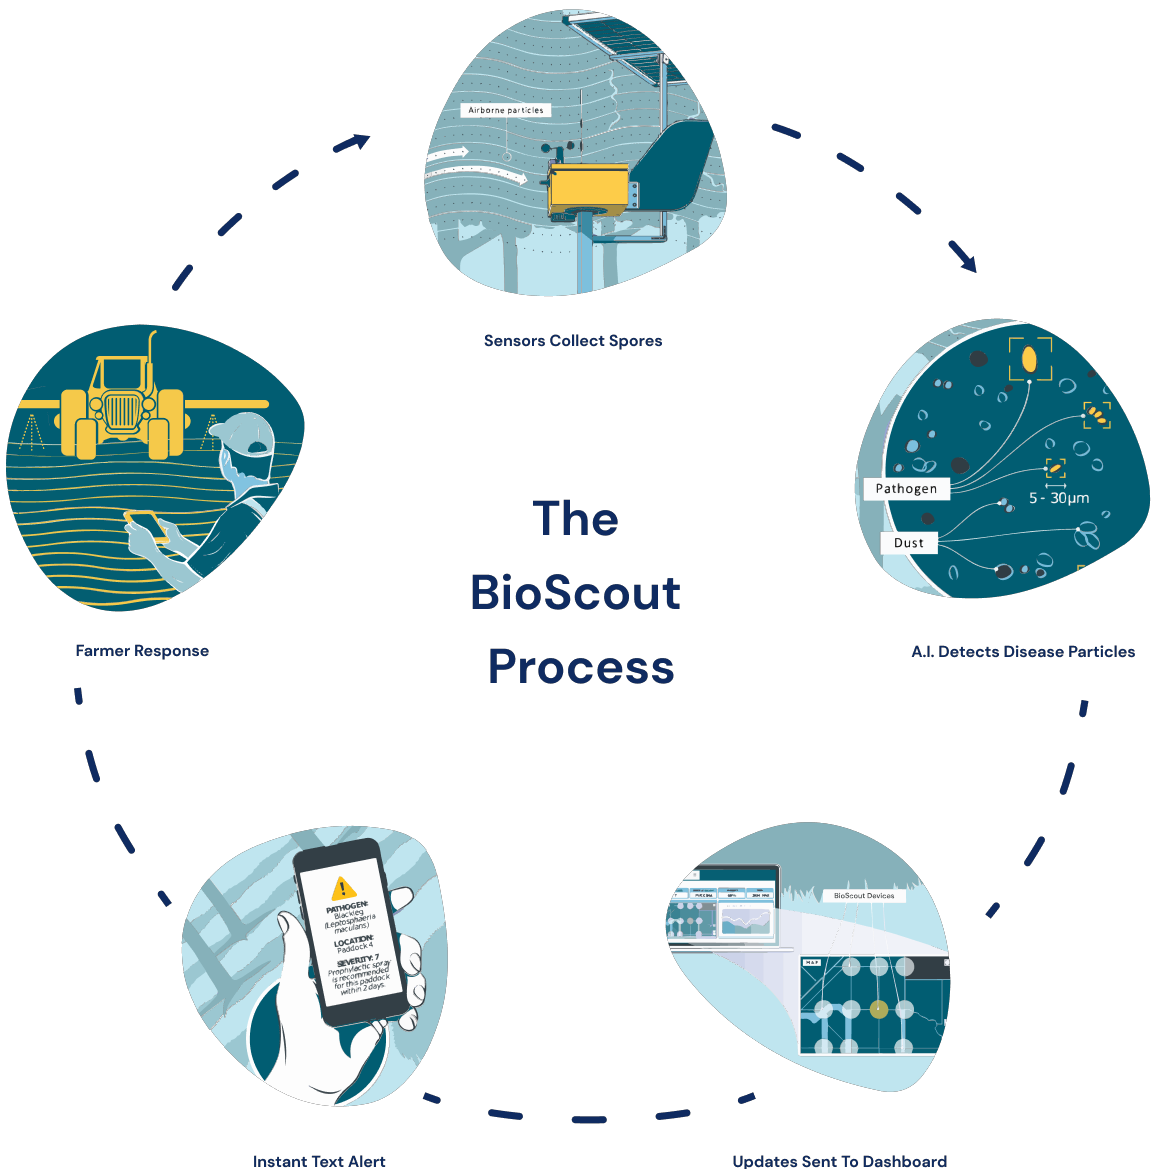 The BioScout process